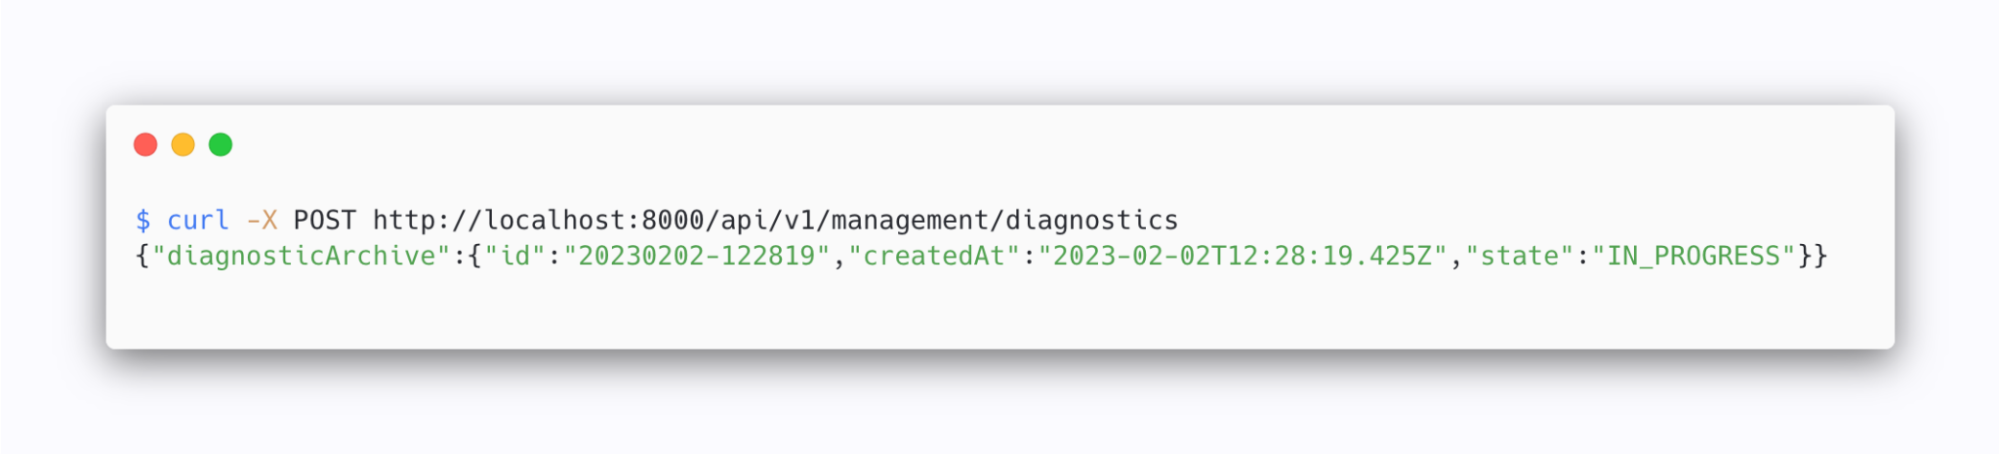 HiveMQ REST API request to create a unified ZIP file of diagnostic